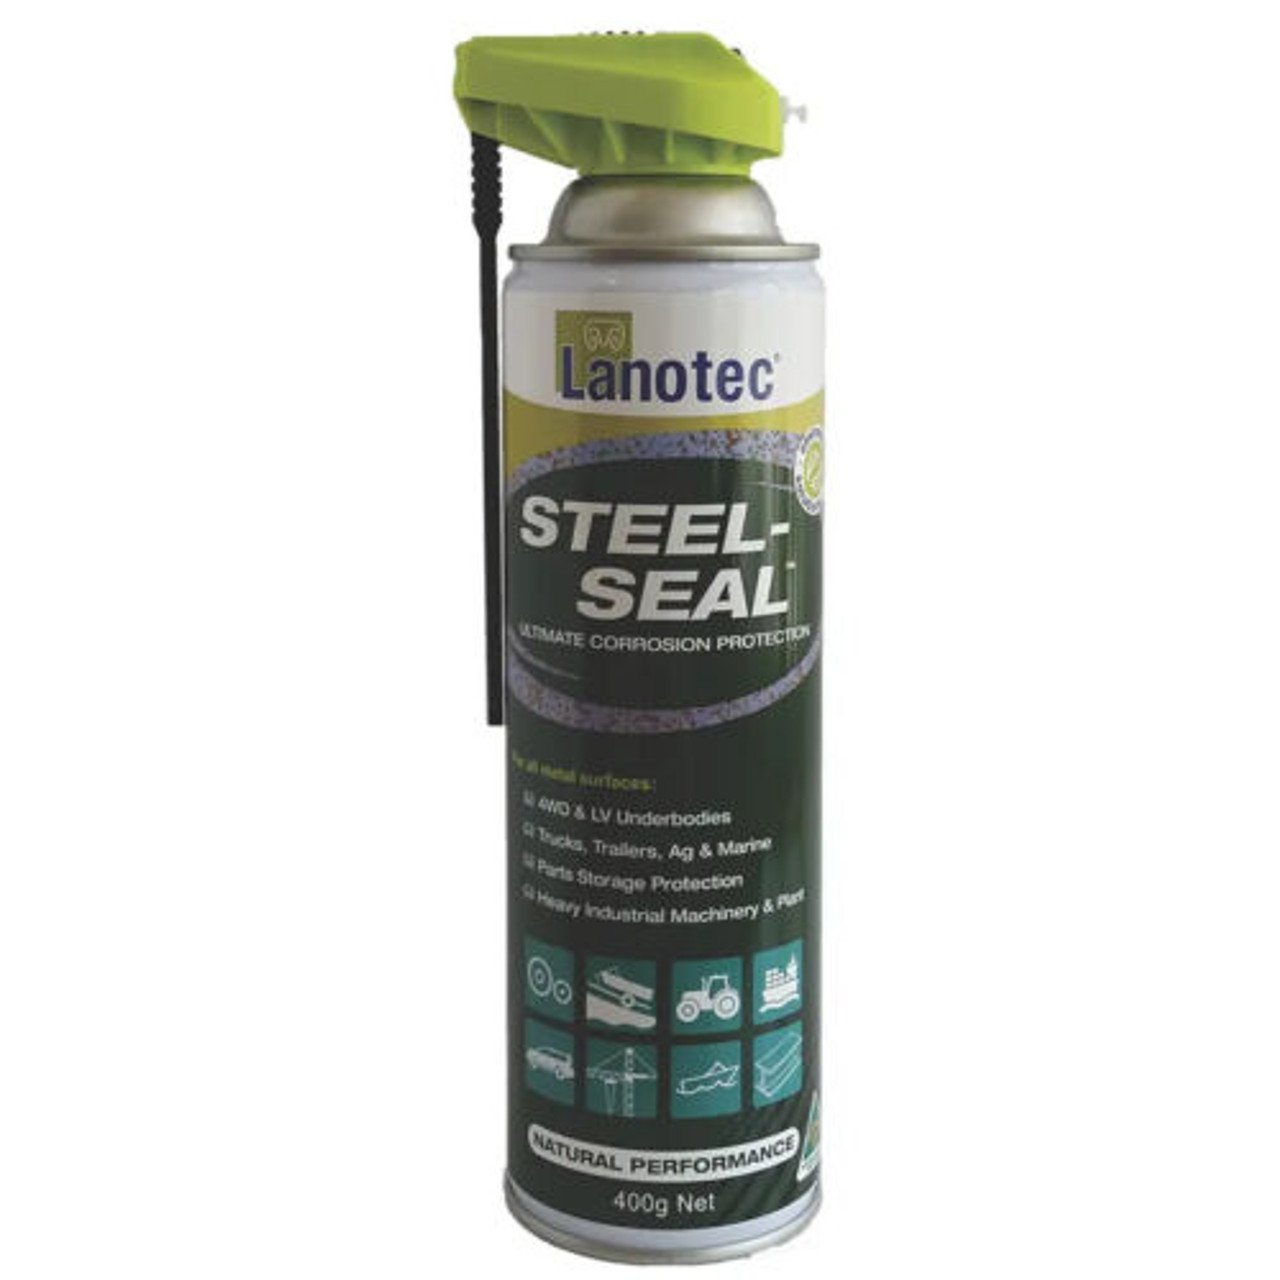 Steel-Seal 300gm  Lanotec